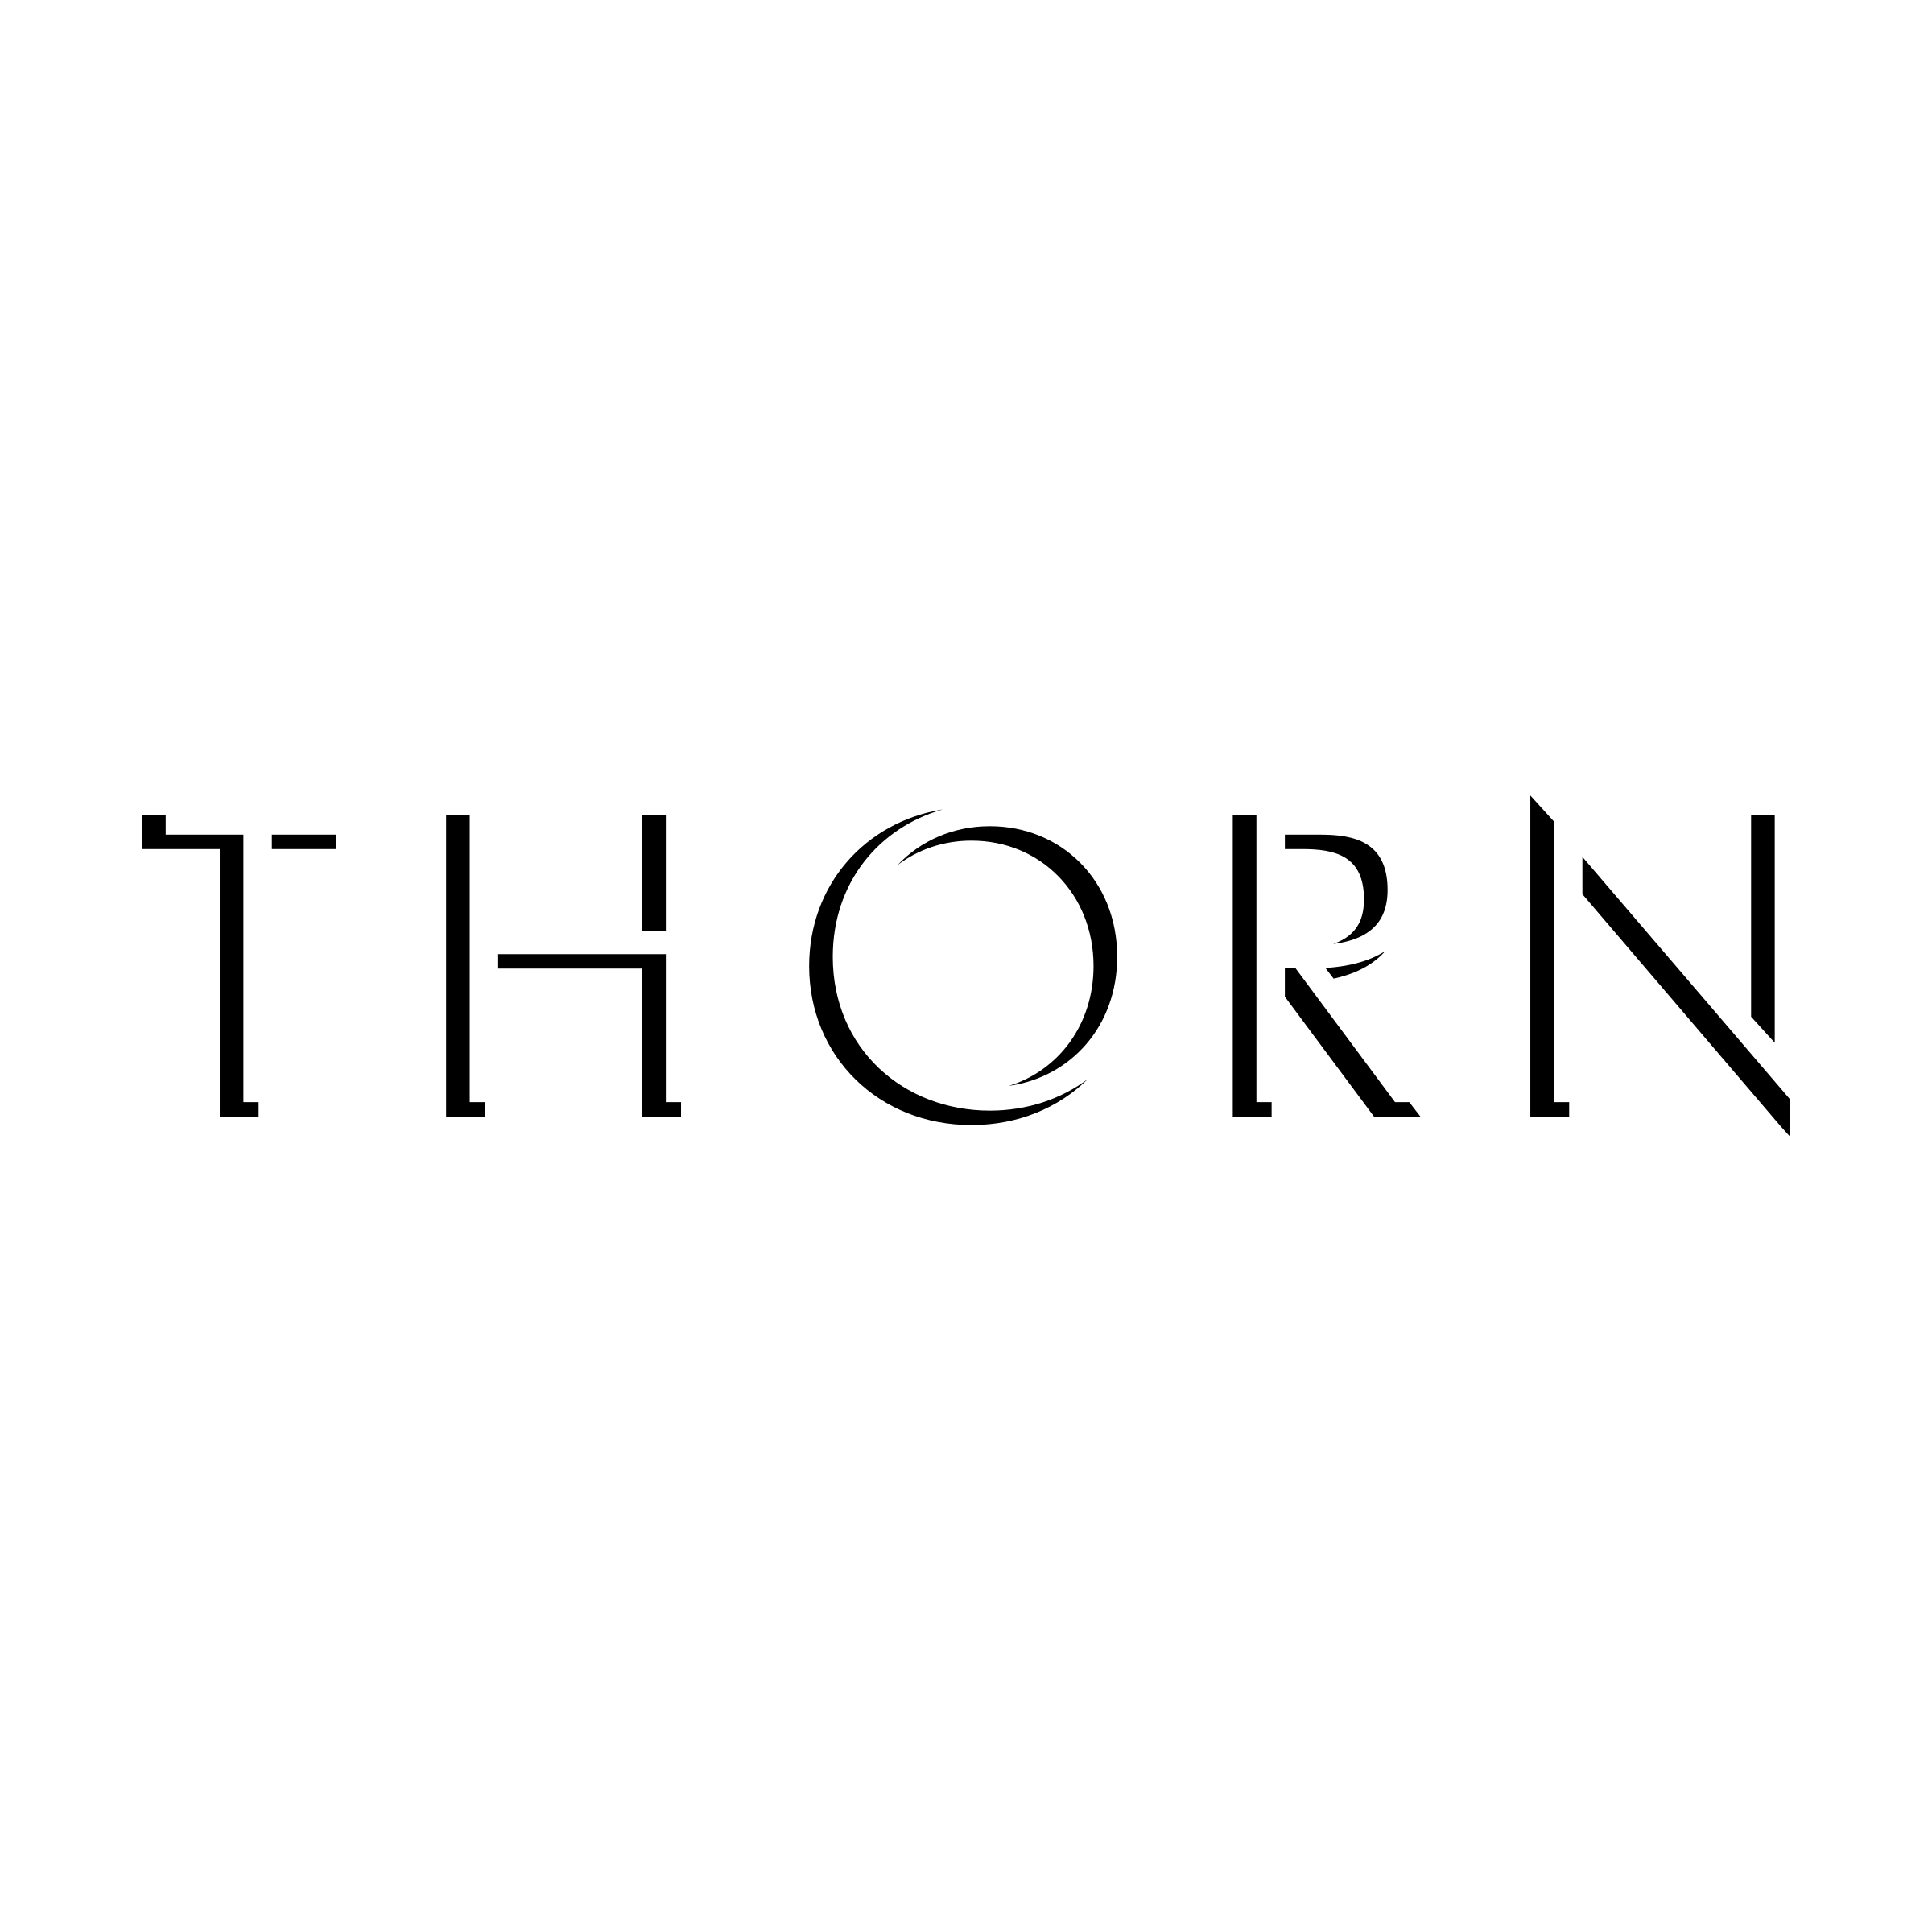 Thorn Logo - Thorn Lighting Logo PNG Transparent & SVG Vector - Freebie Supply